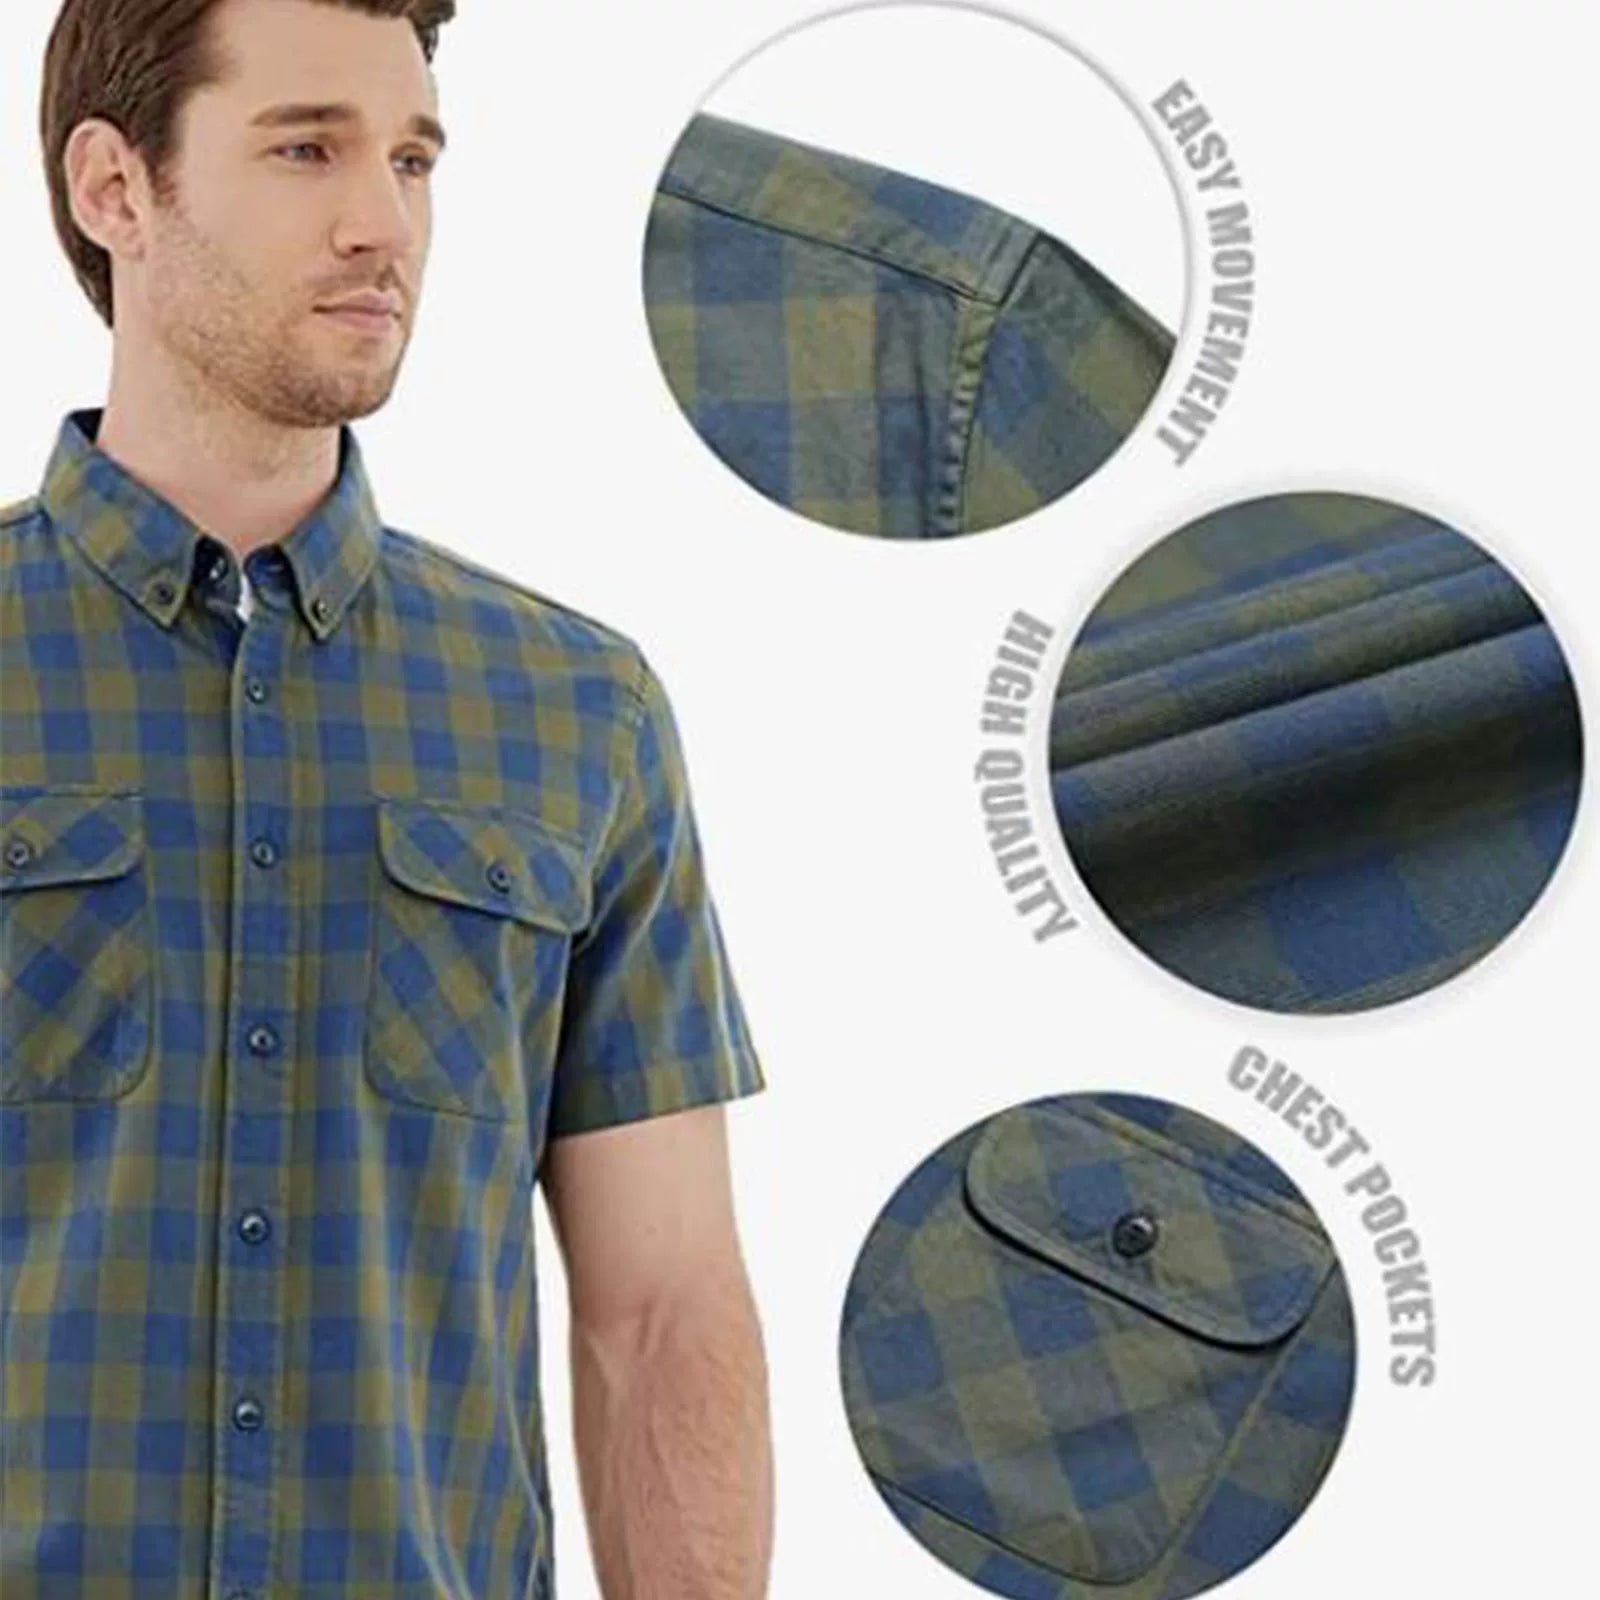 Dubinik® Mens Short Sleeve Button Down Shirts 100% Cotton Plaid Men's Casual Button-Down Shirts with Pocket#02076